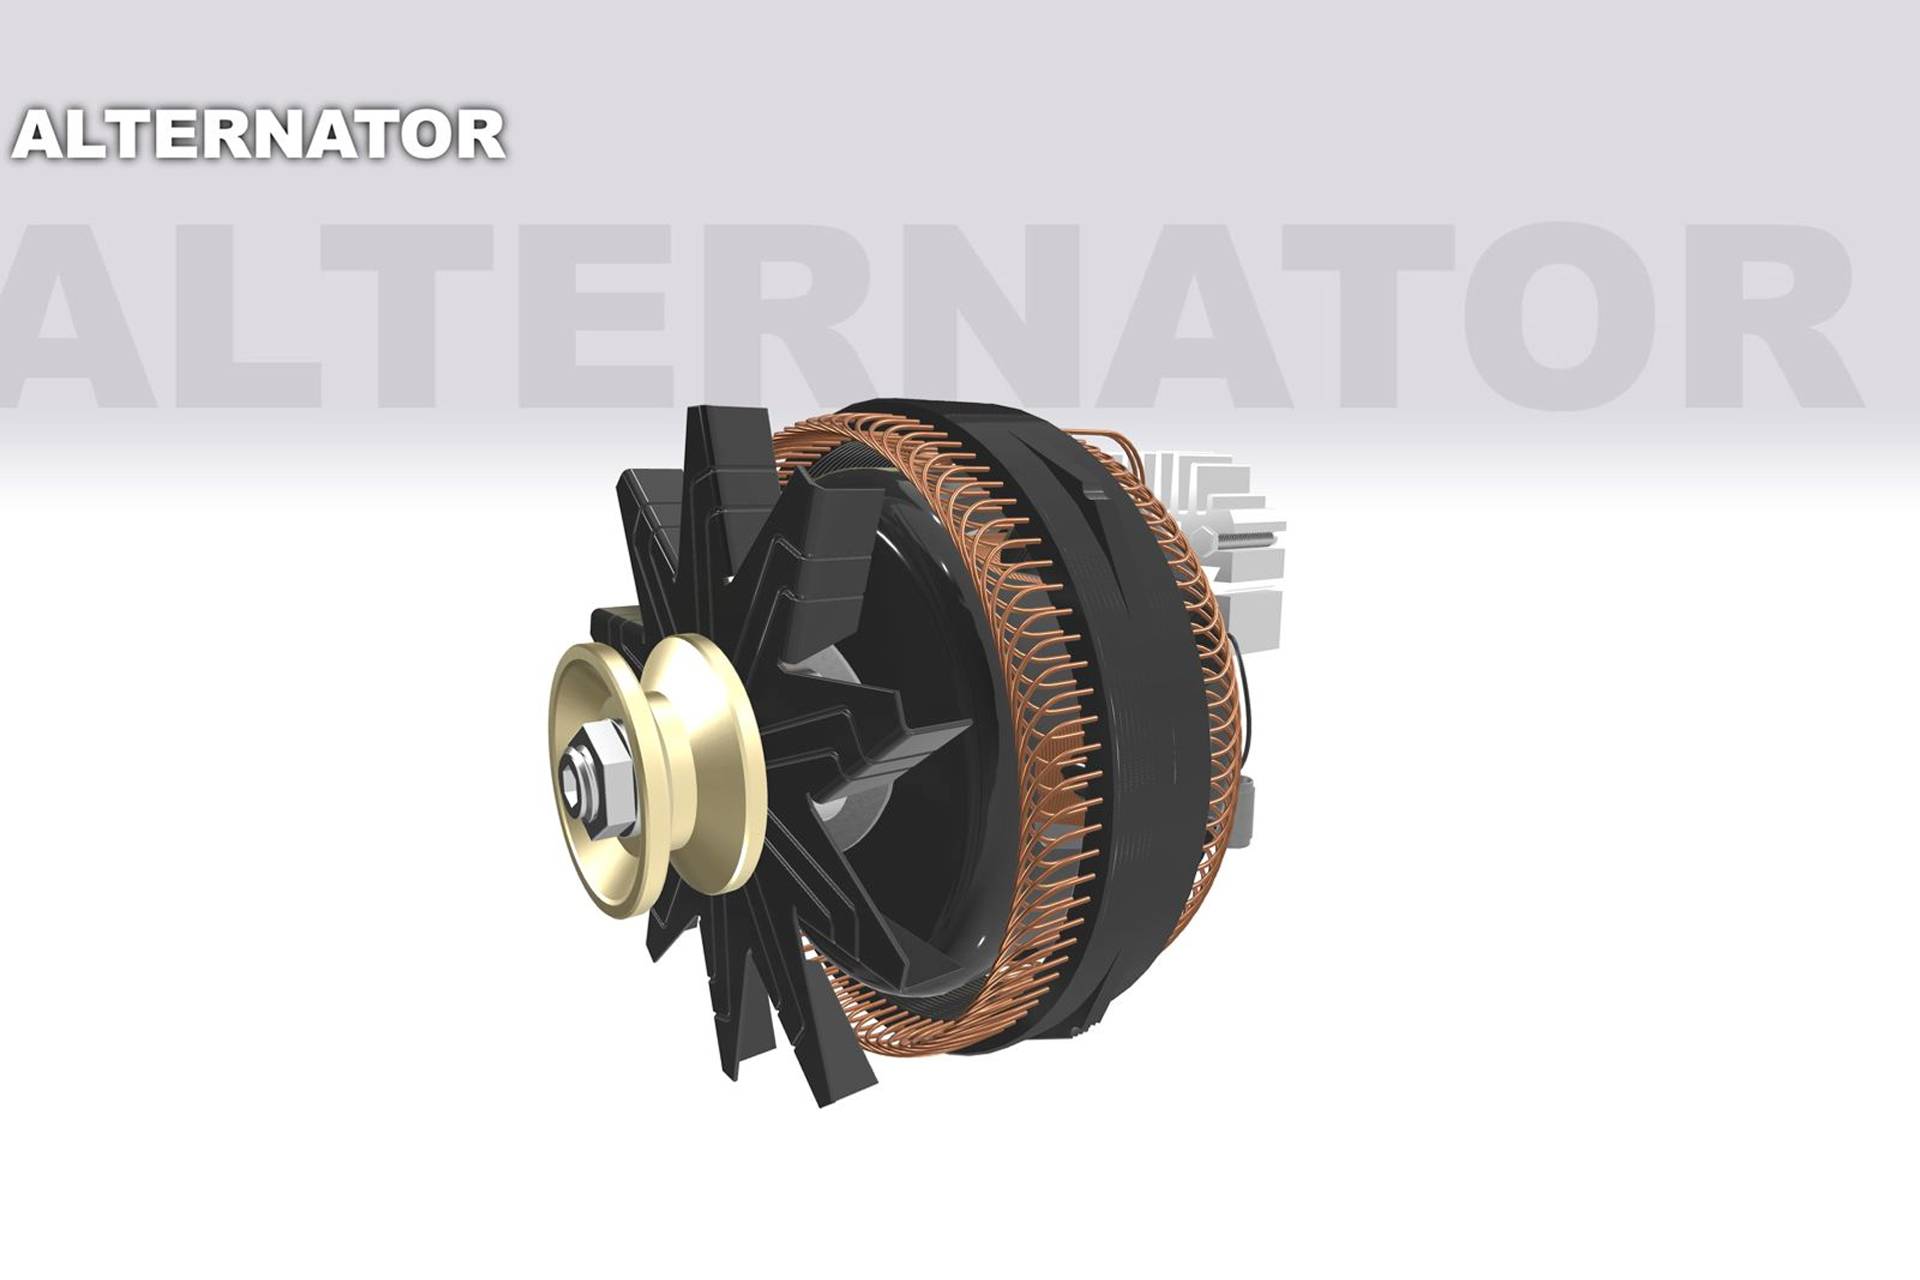 Alternator – 3D Product Display Online